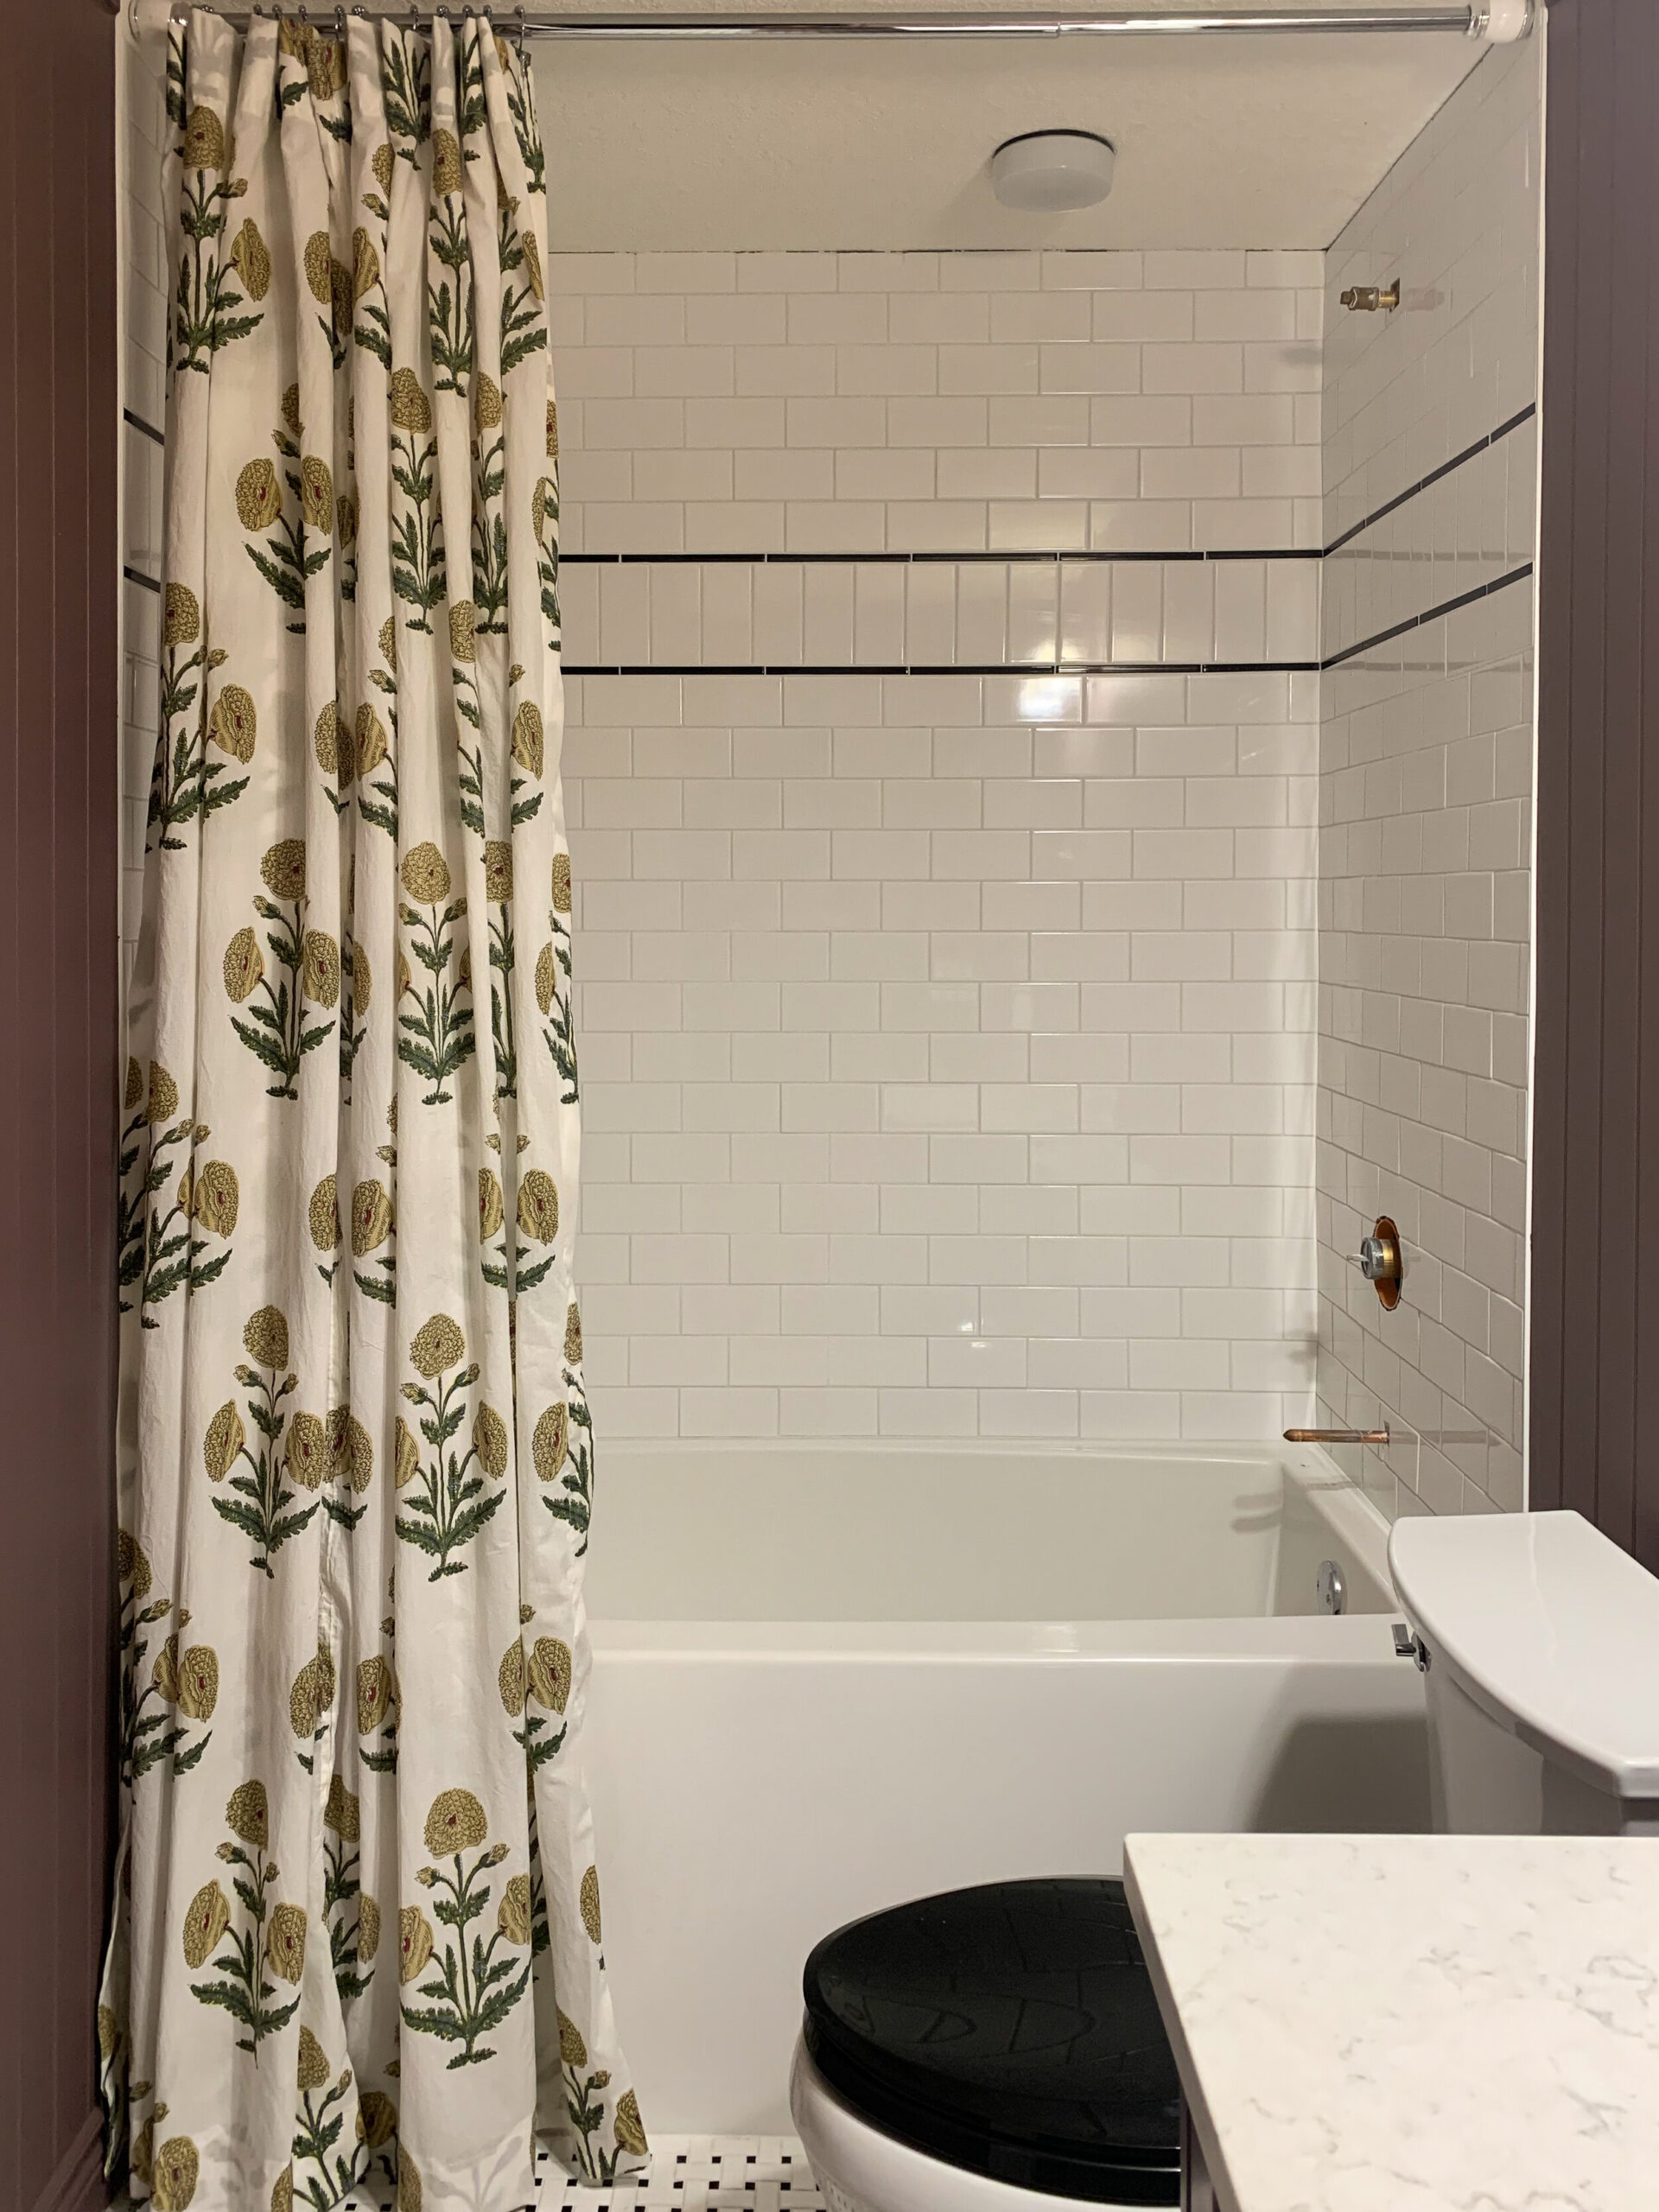 DIY Full Length Shower Curtain